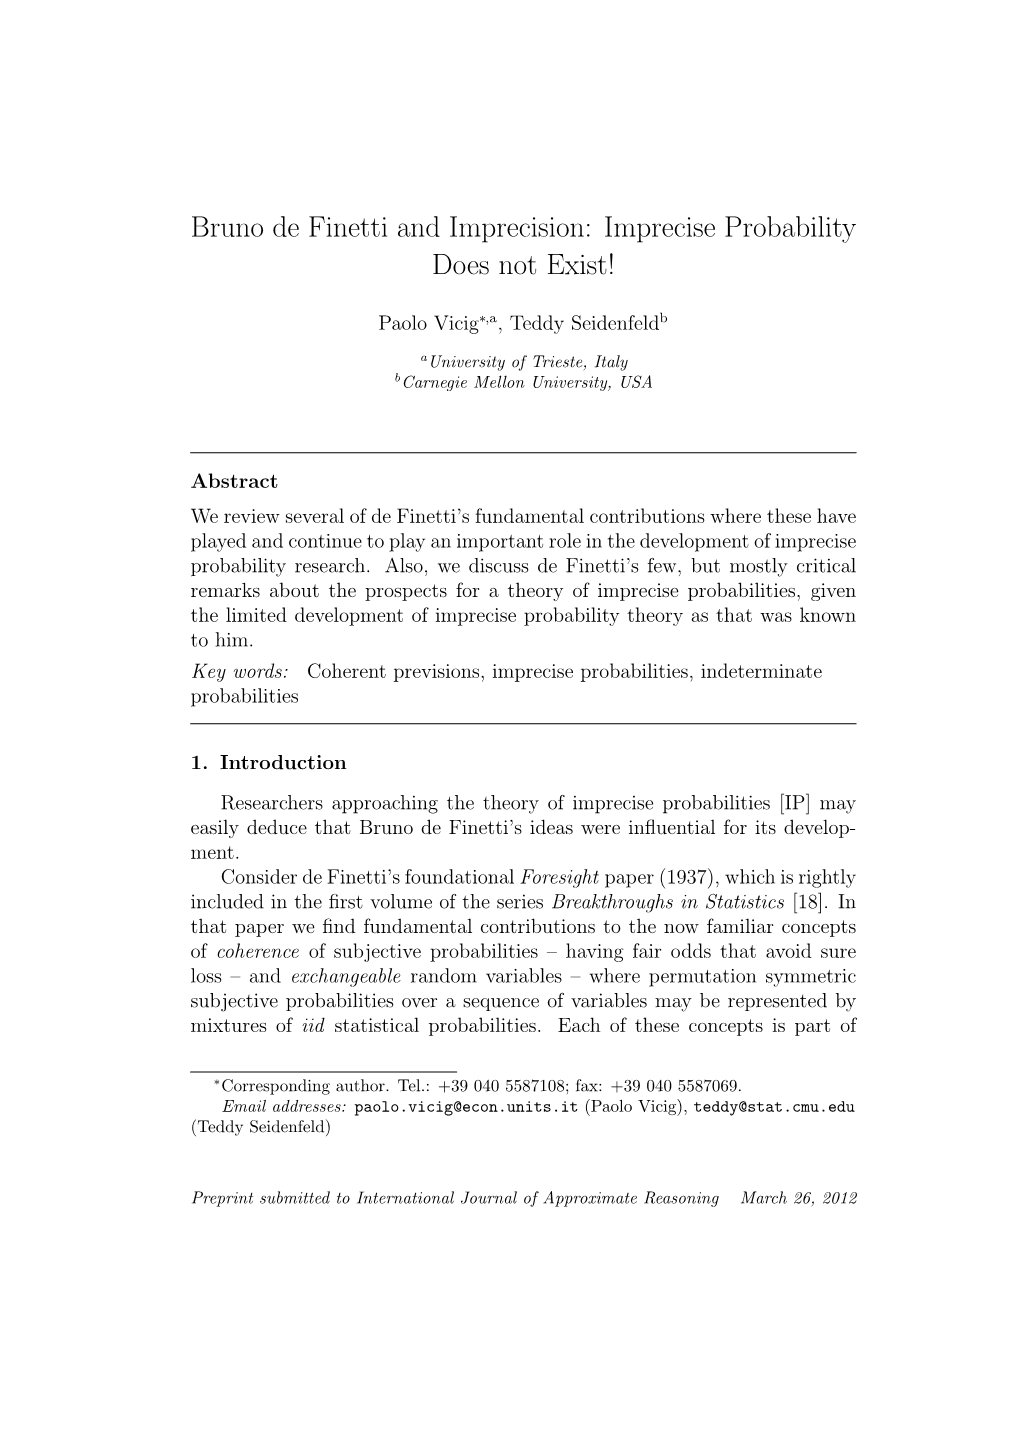 Bruno De Finetti and Imprecision: Imprecise Probability Does Not Exist!